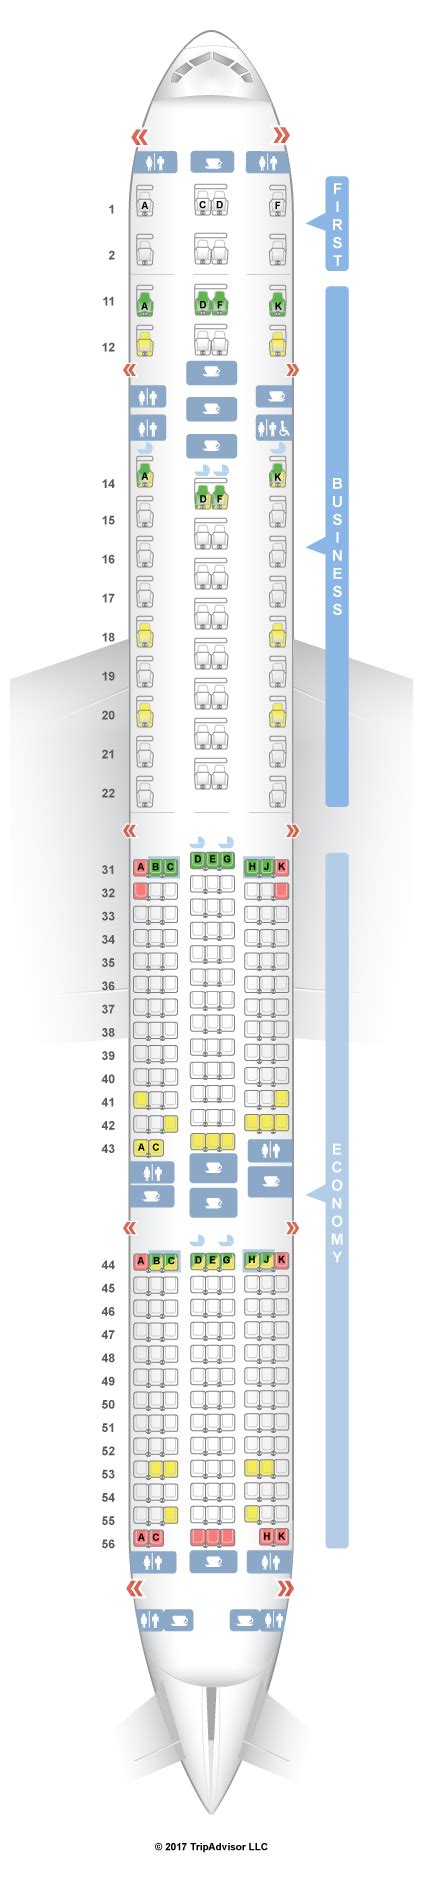 Seatguru Seat Map Singapore Airlines Boeing 777 300er 77w Three Class